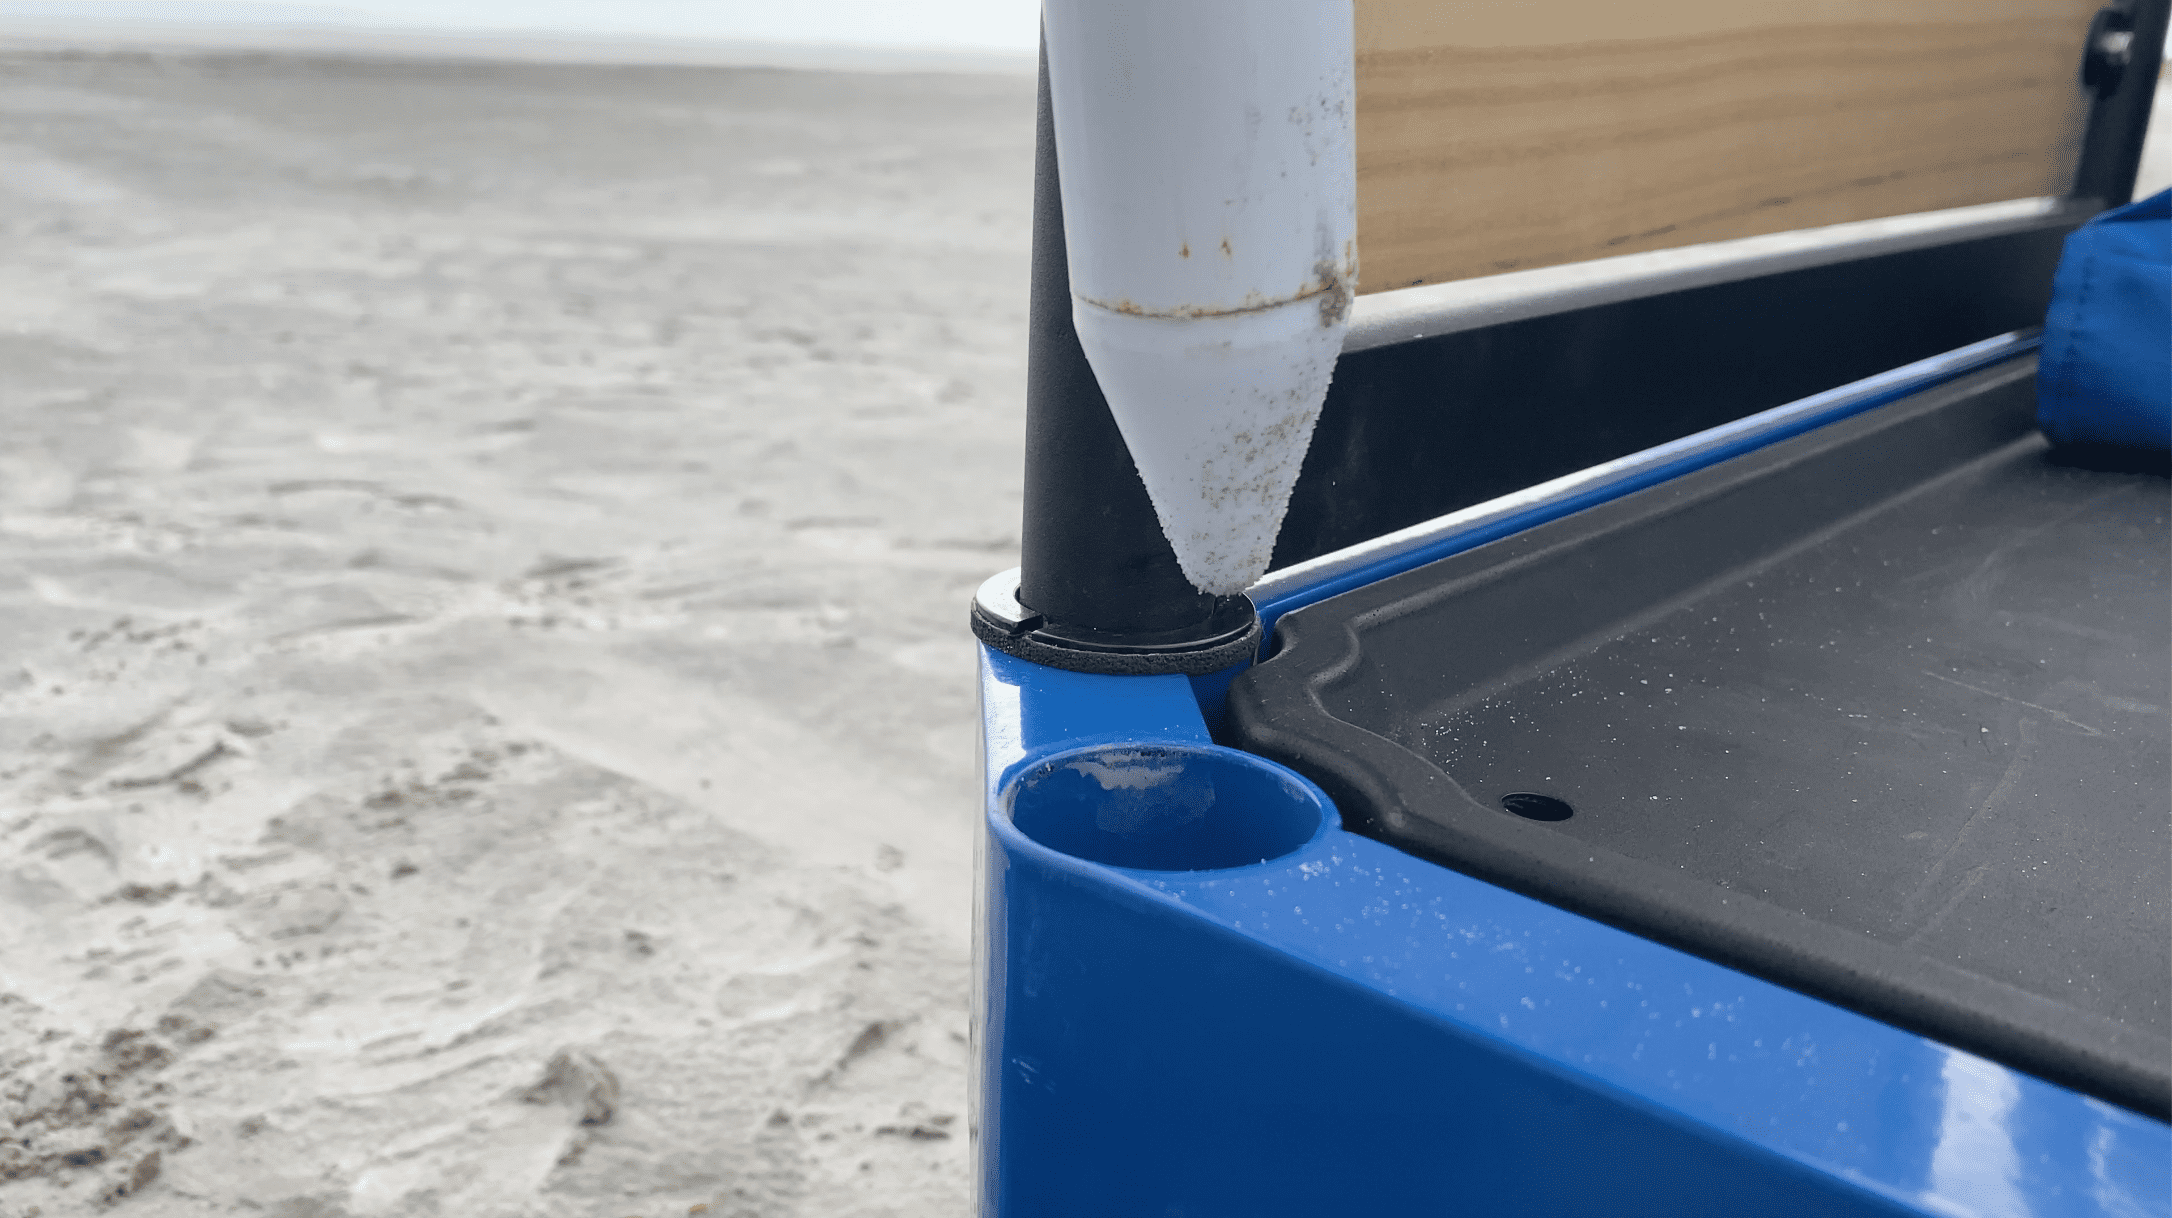 e-Beach Wagon has built-in umbrella holders